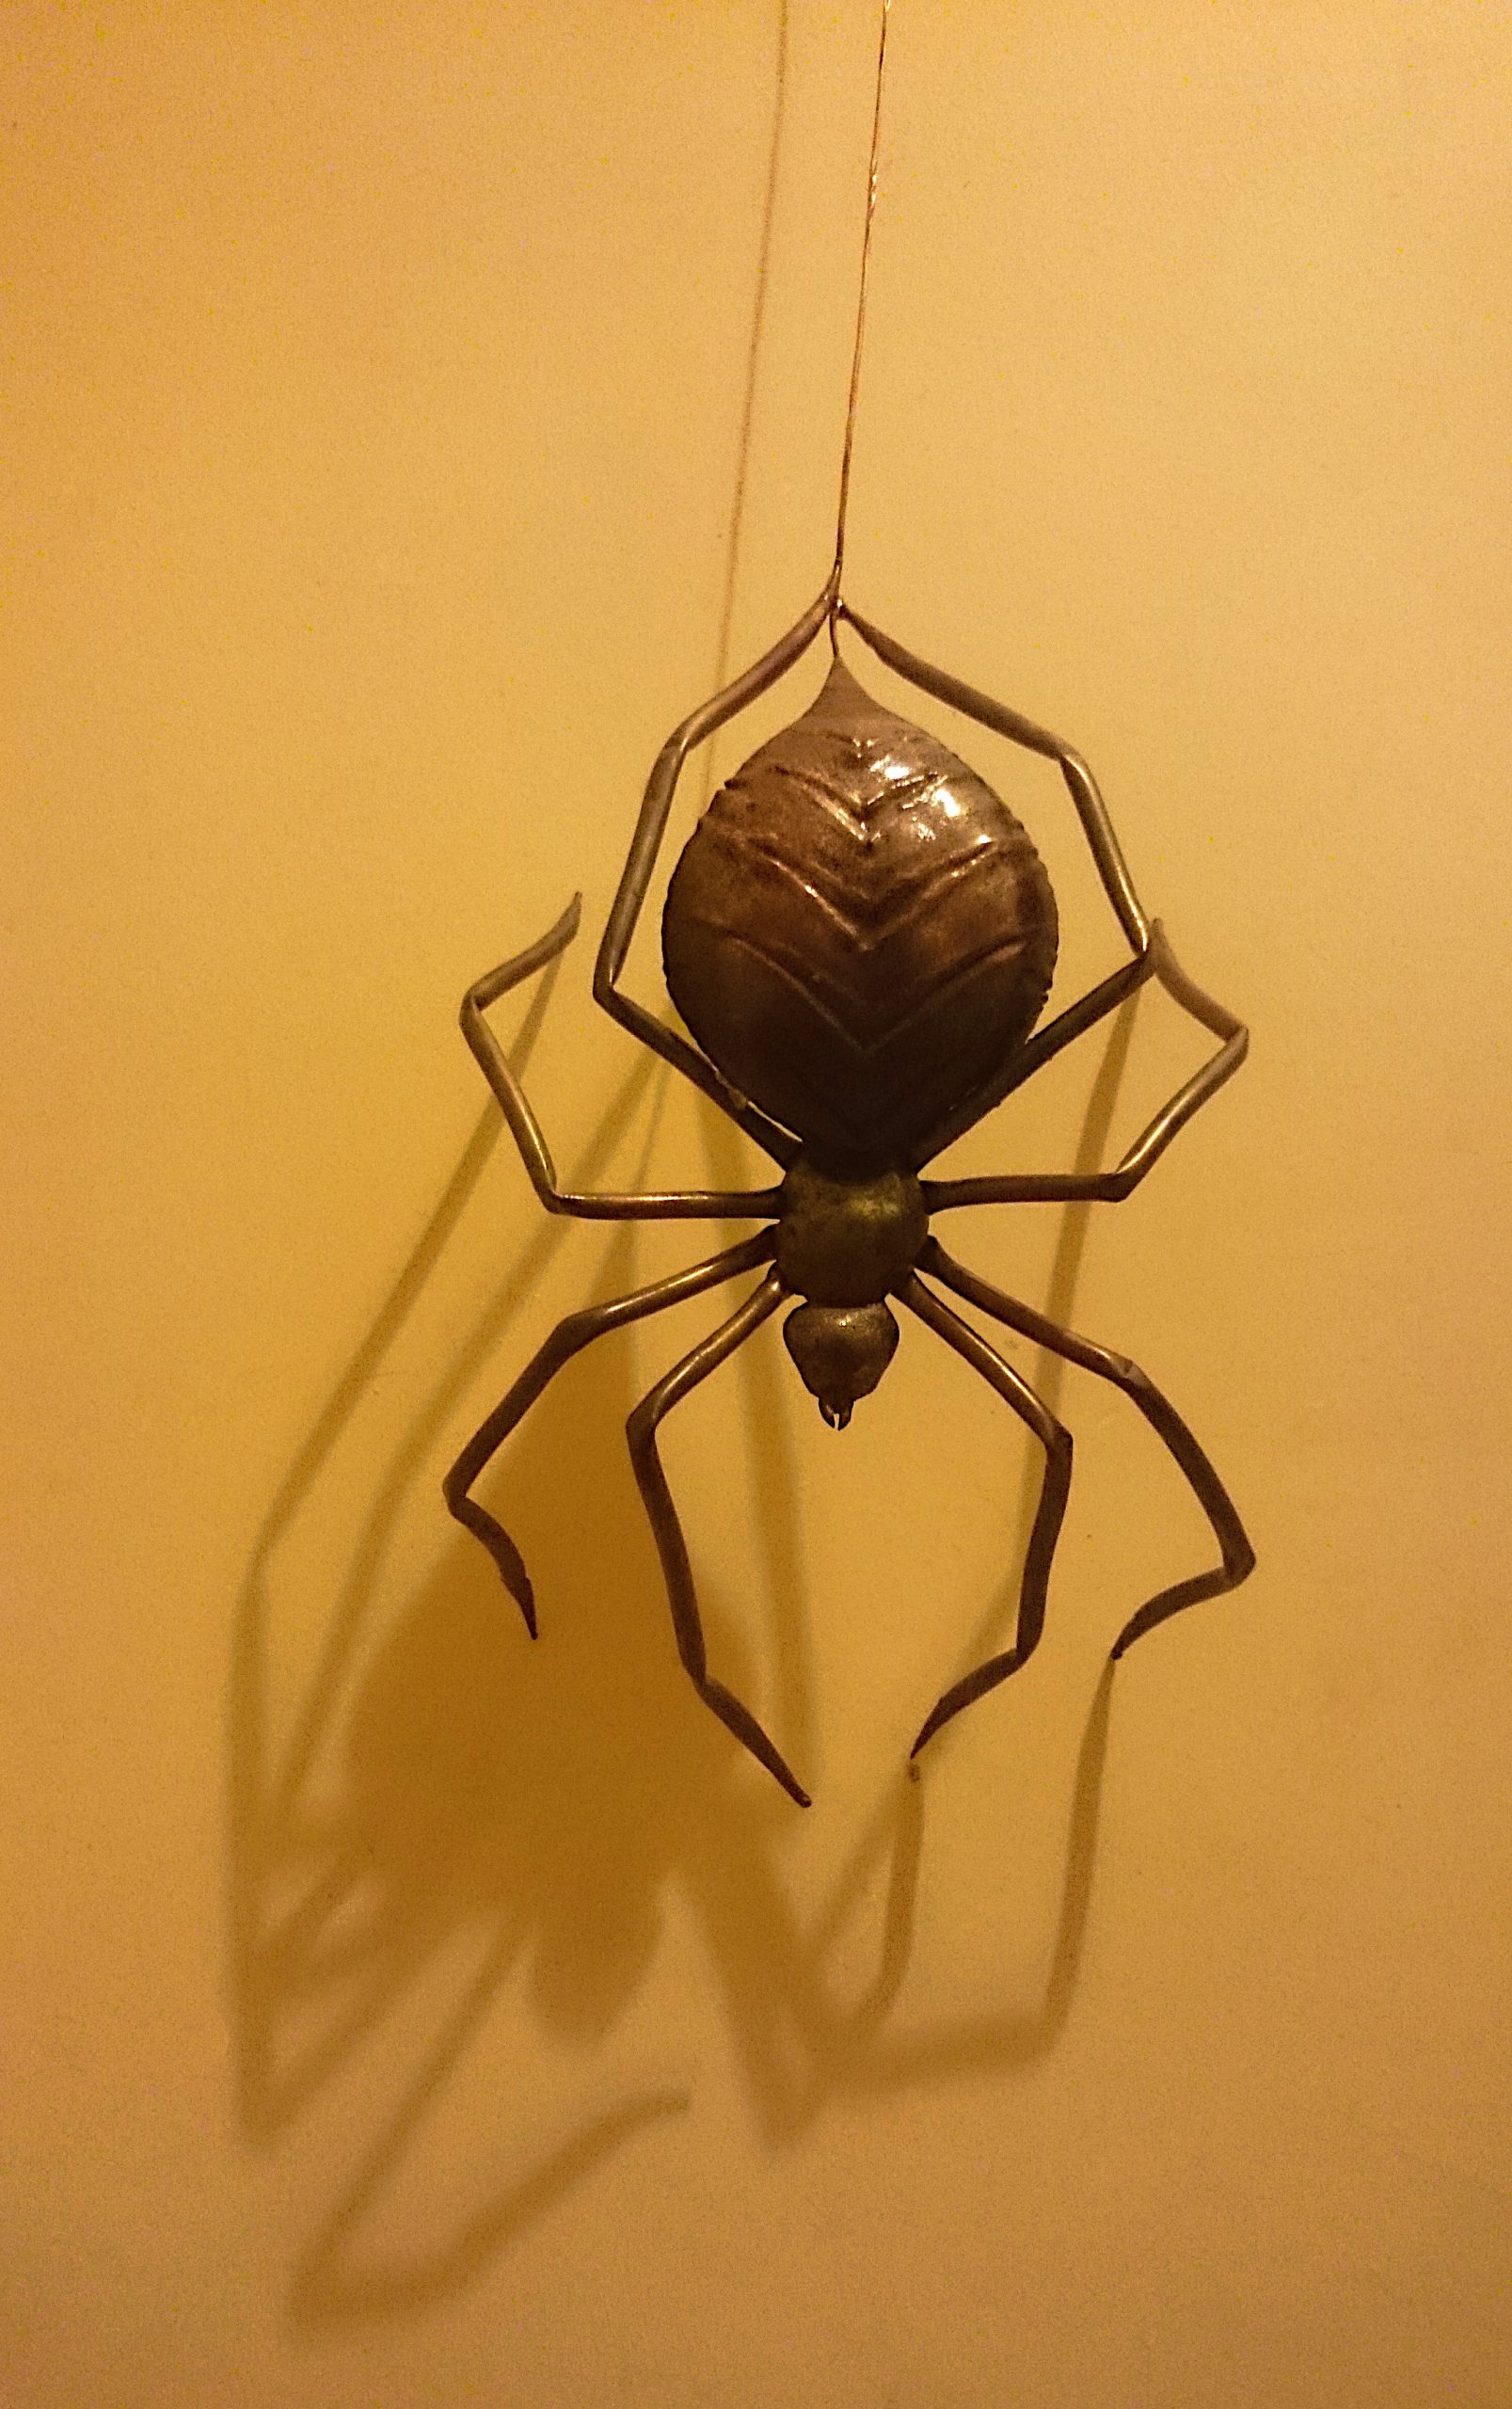 Emily Stone Copper Spider Sculpture – Copper Creatures